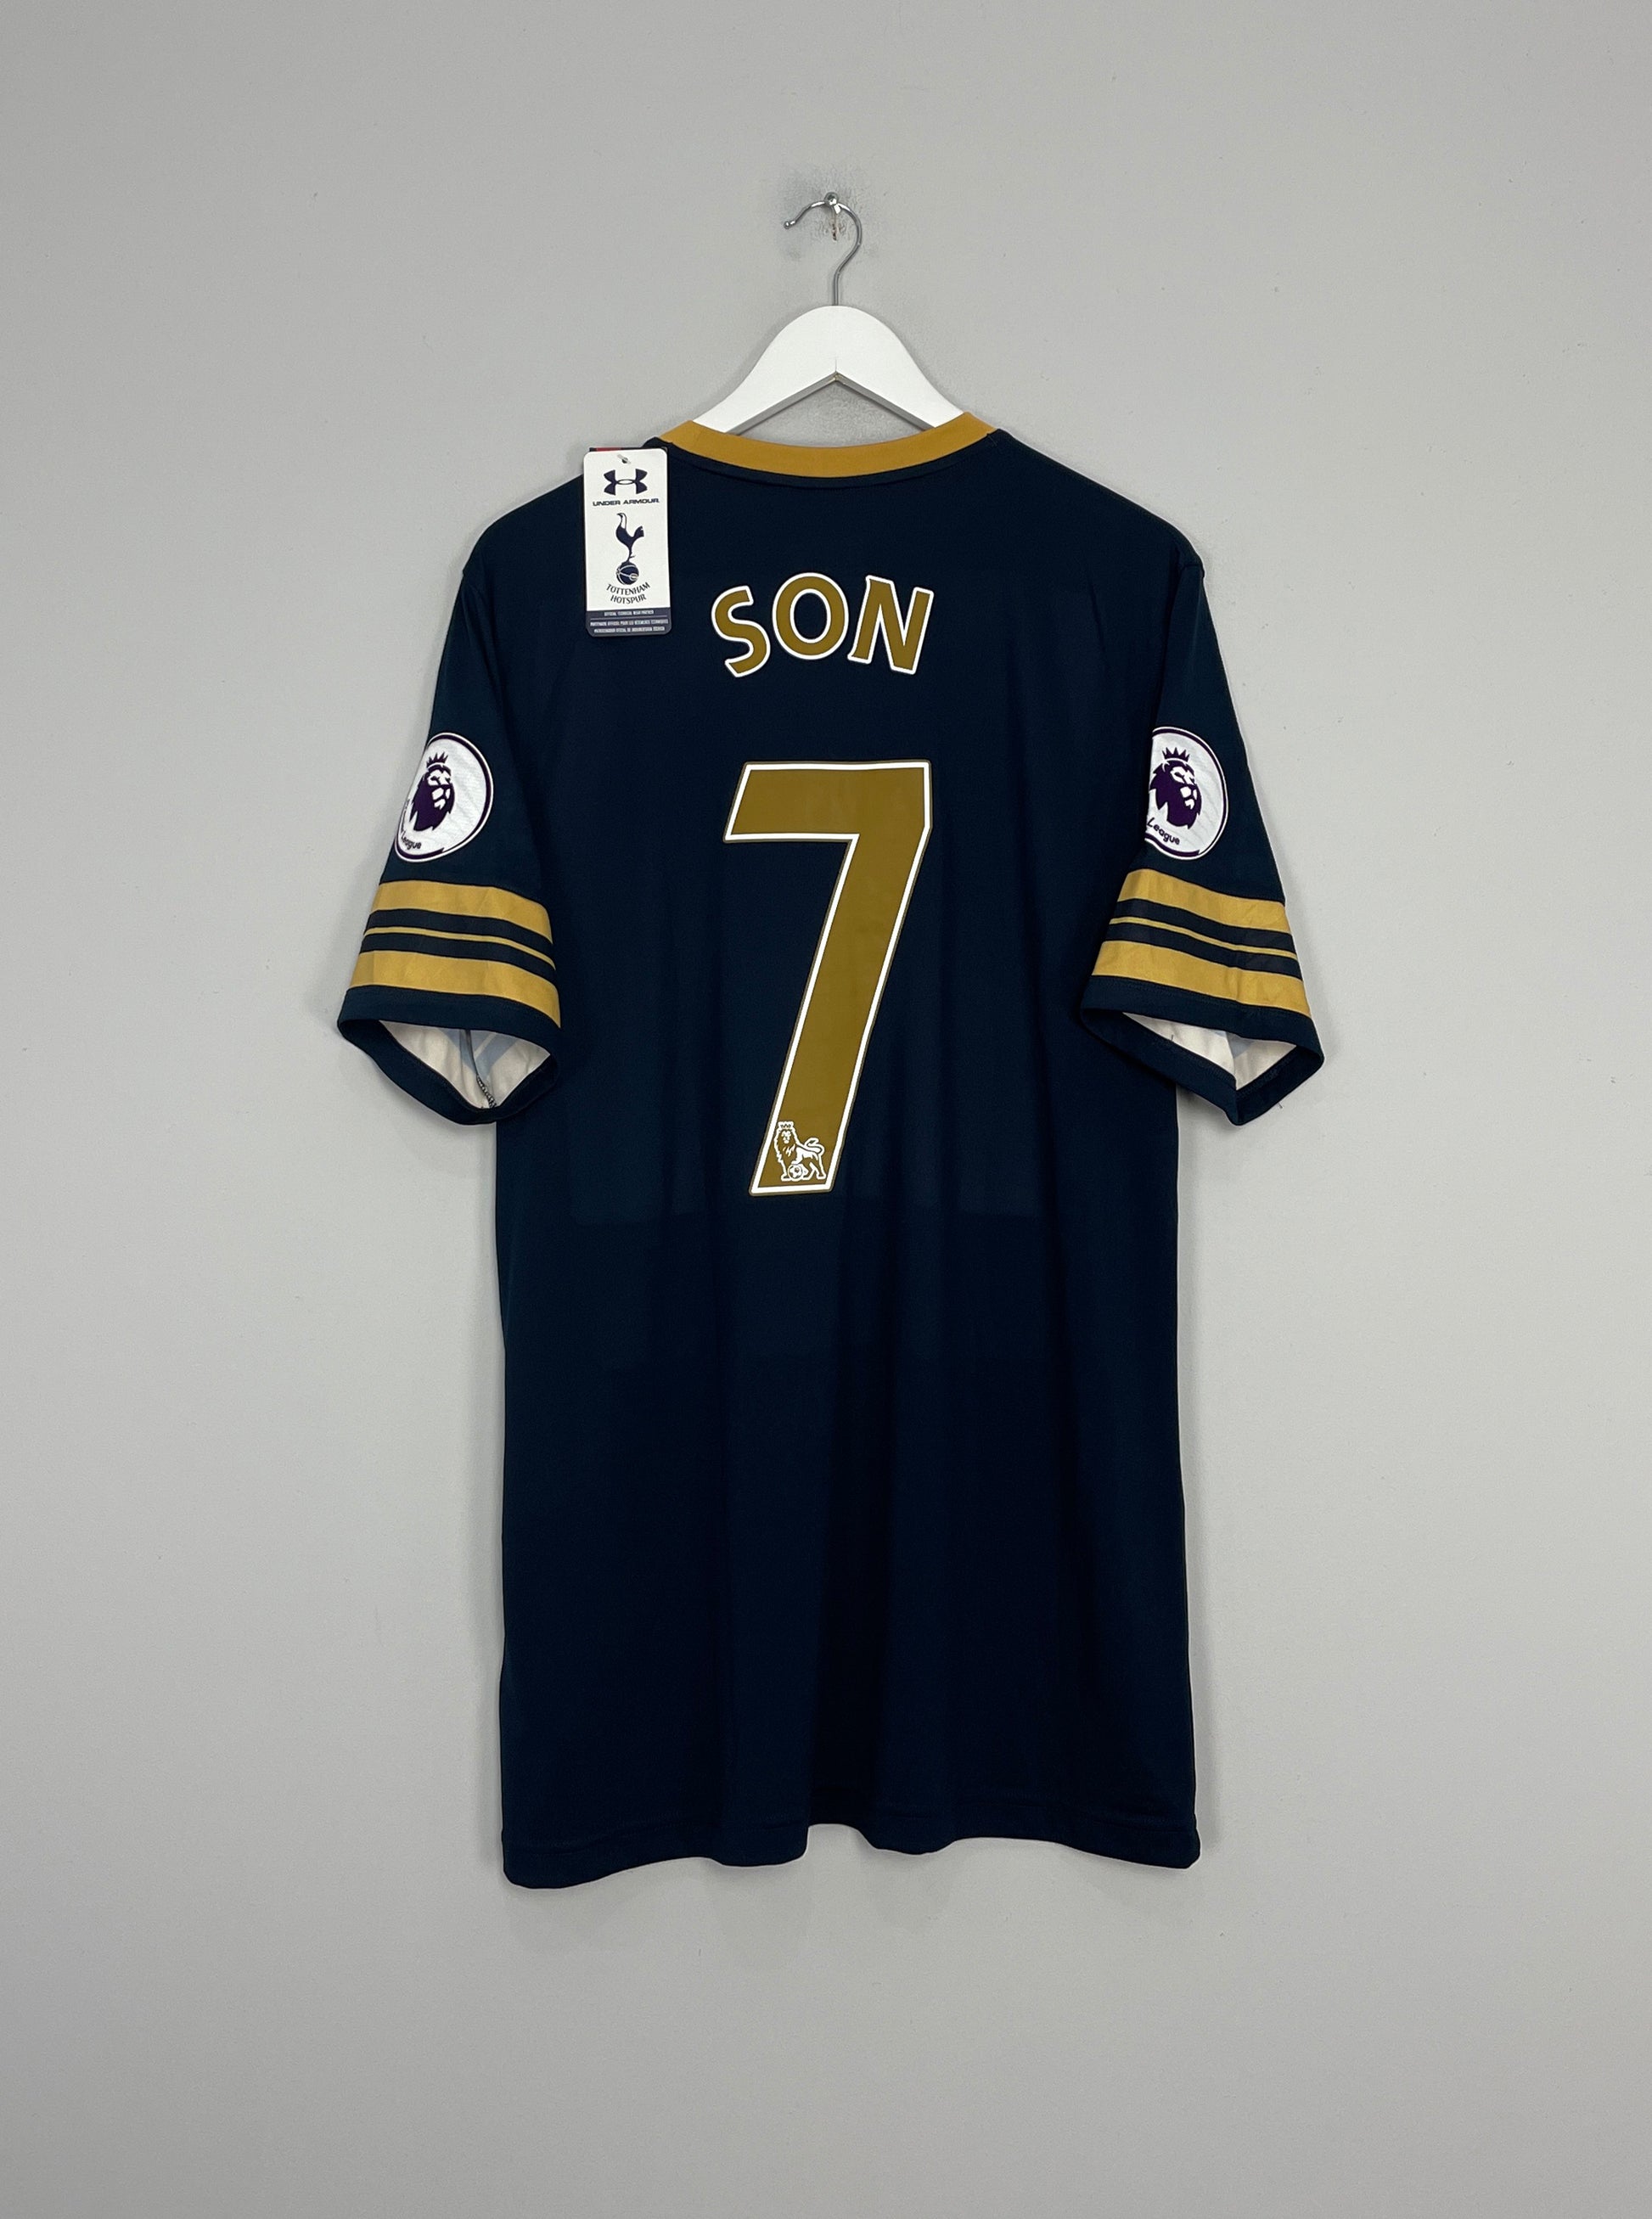  Image of the Tottenham Son shirt from the 2016/17 season